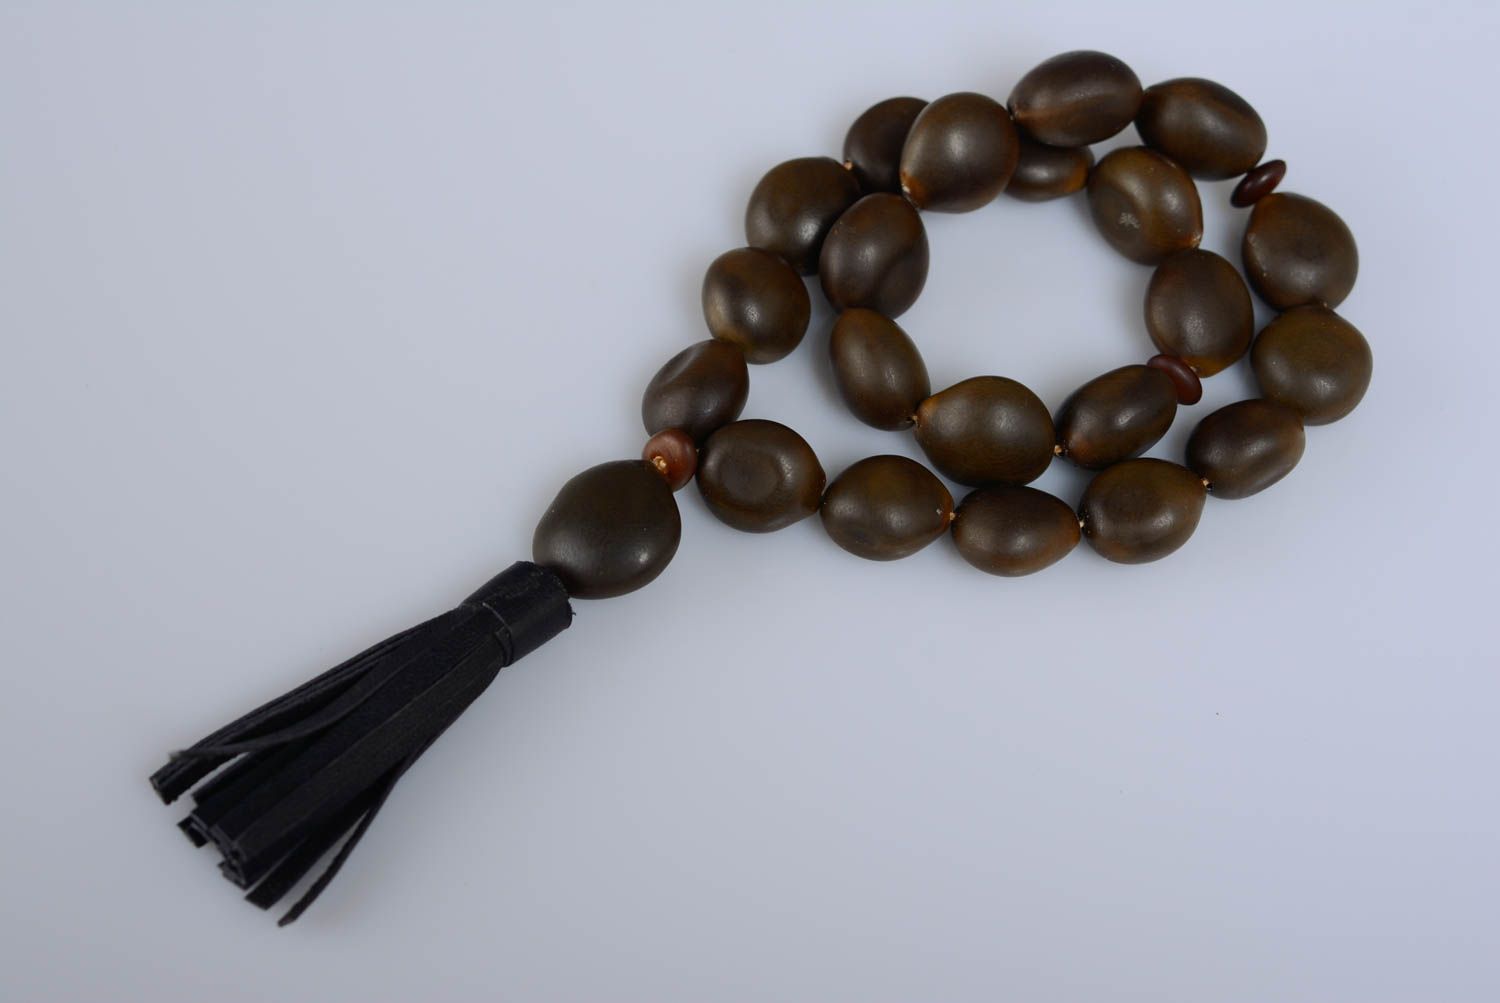 Handmade wooden prayer beads wooden rosary beads meditation supplies gift ideas photo 4